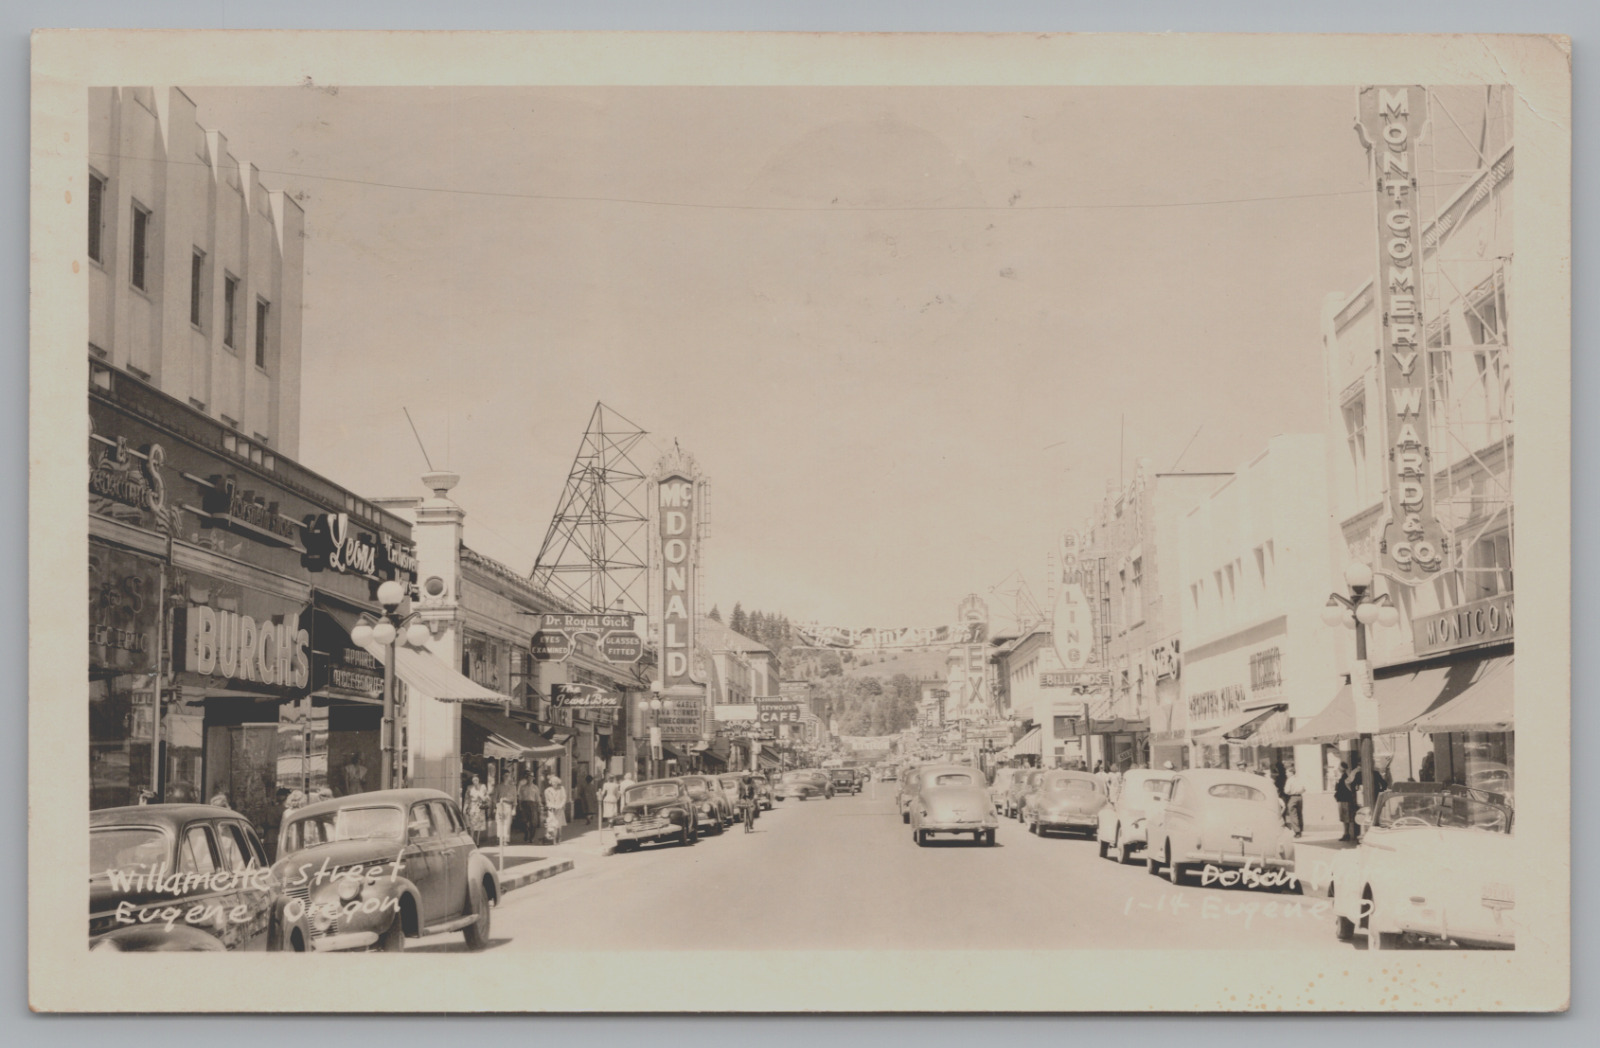 Postcard, RPPC, Willamette St, Eugene, Oregon, Shops, Cafe, Cars, People c1950